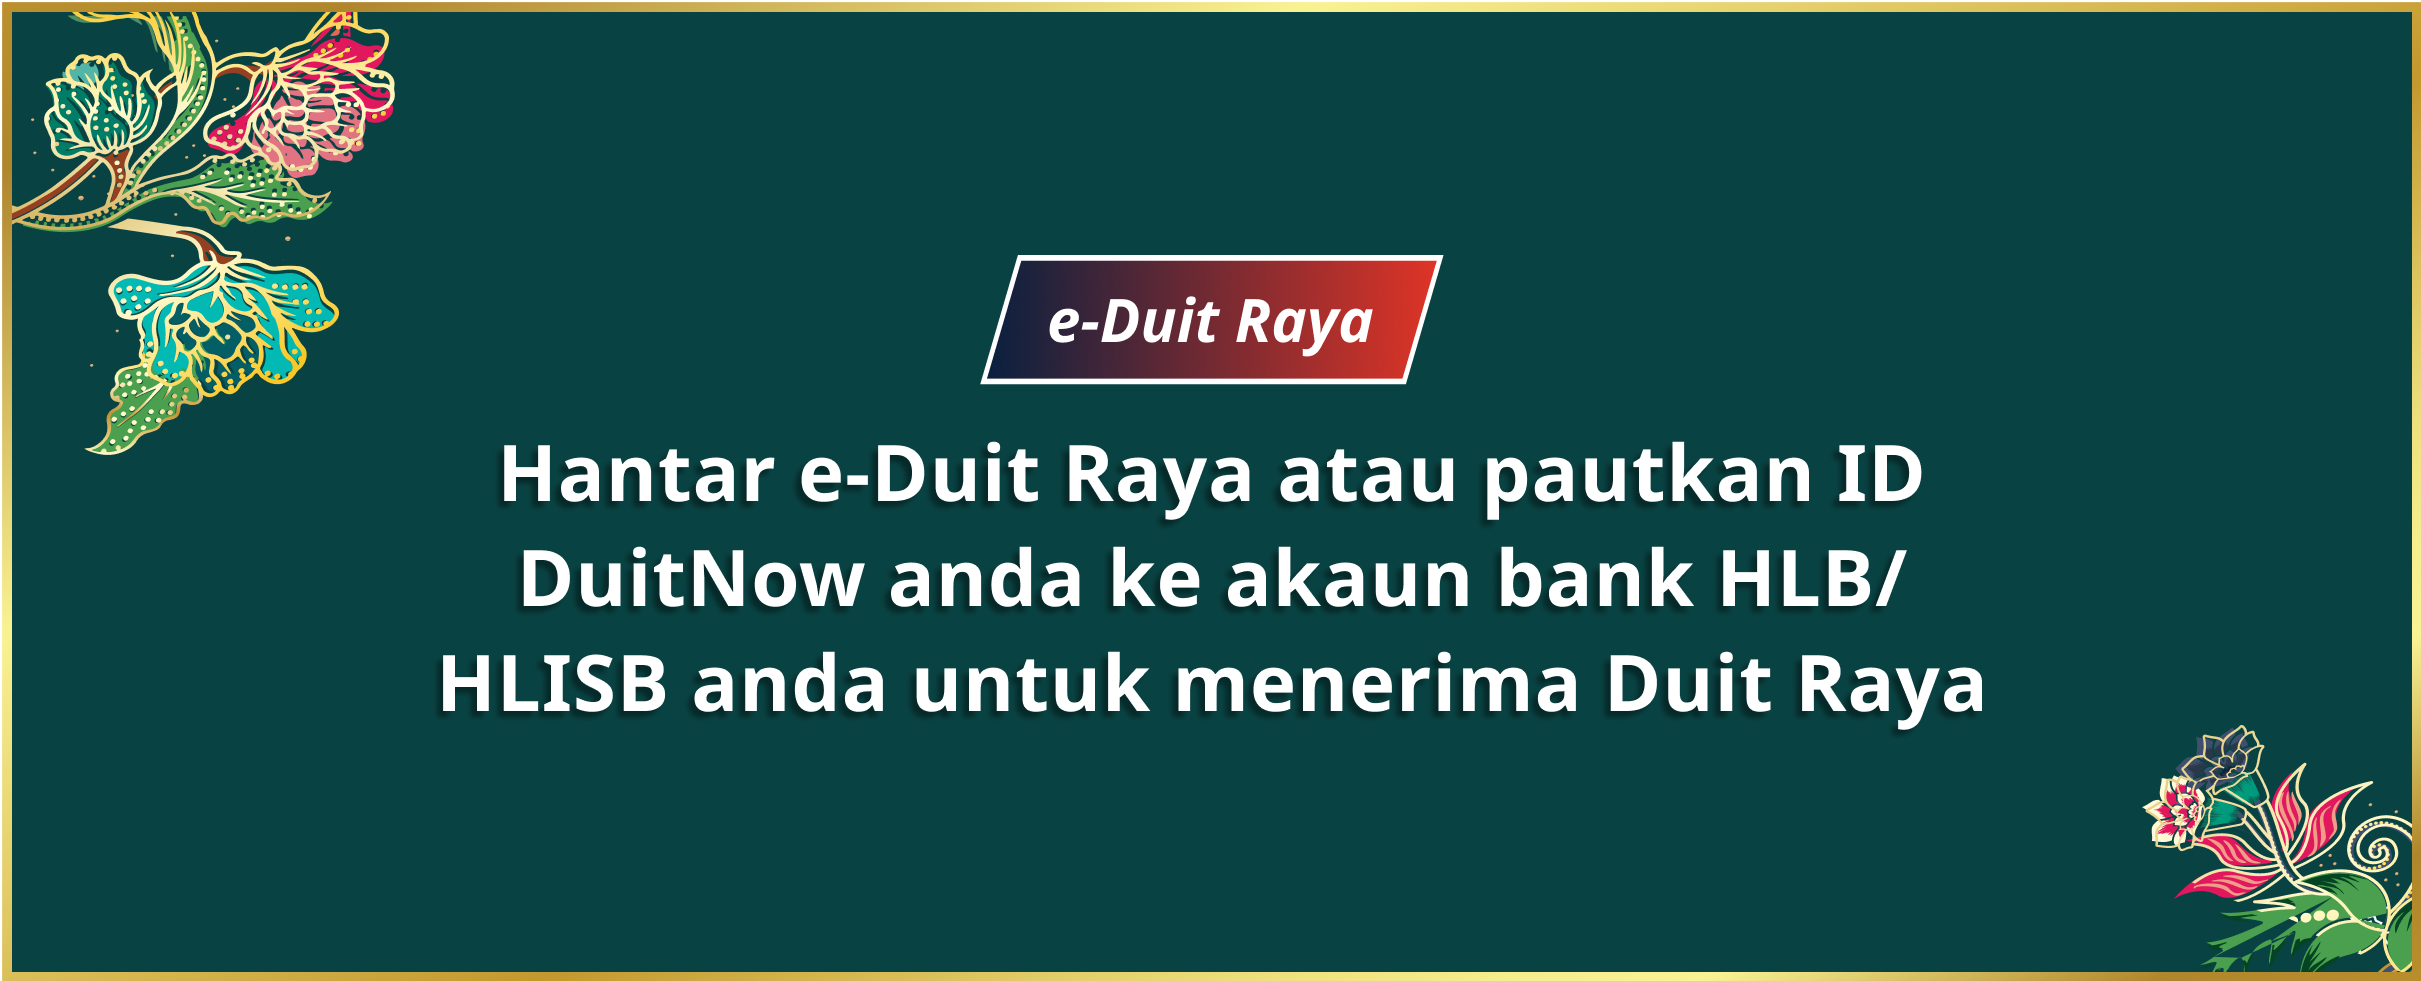 e-Duit Raya